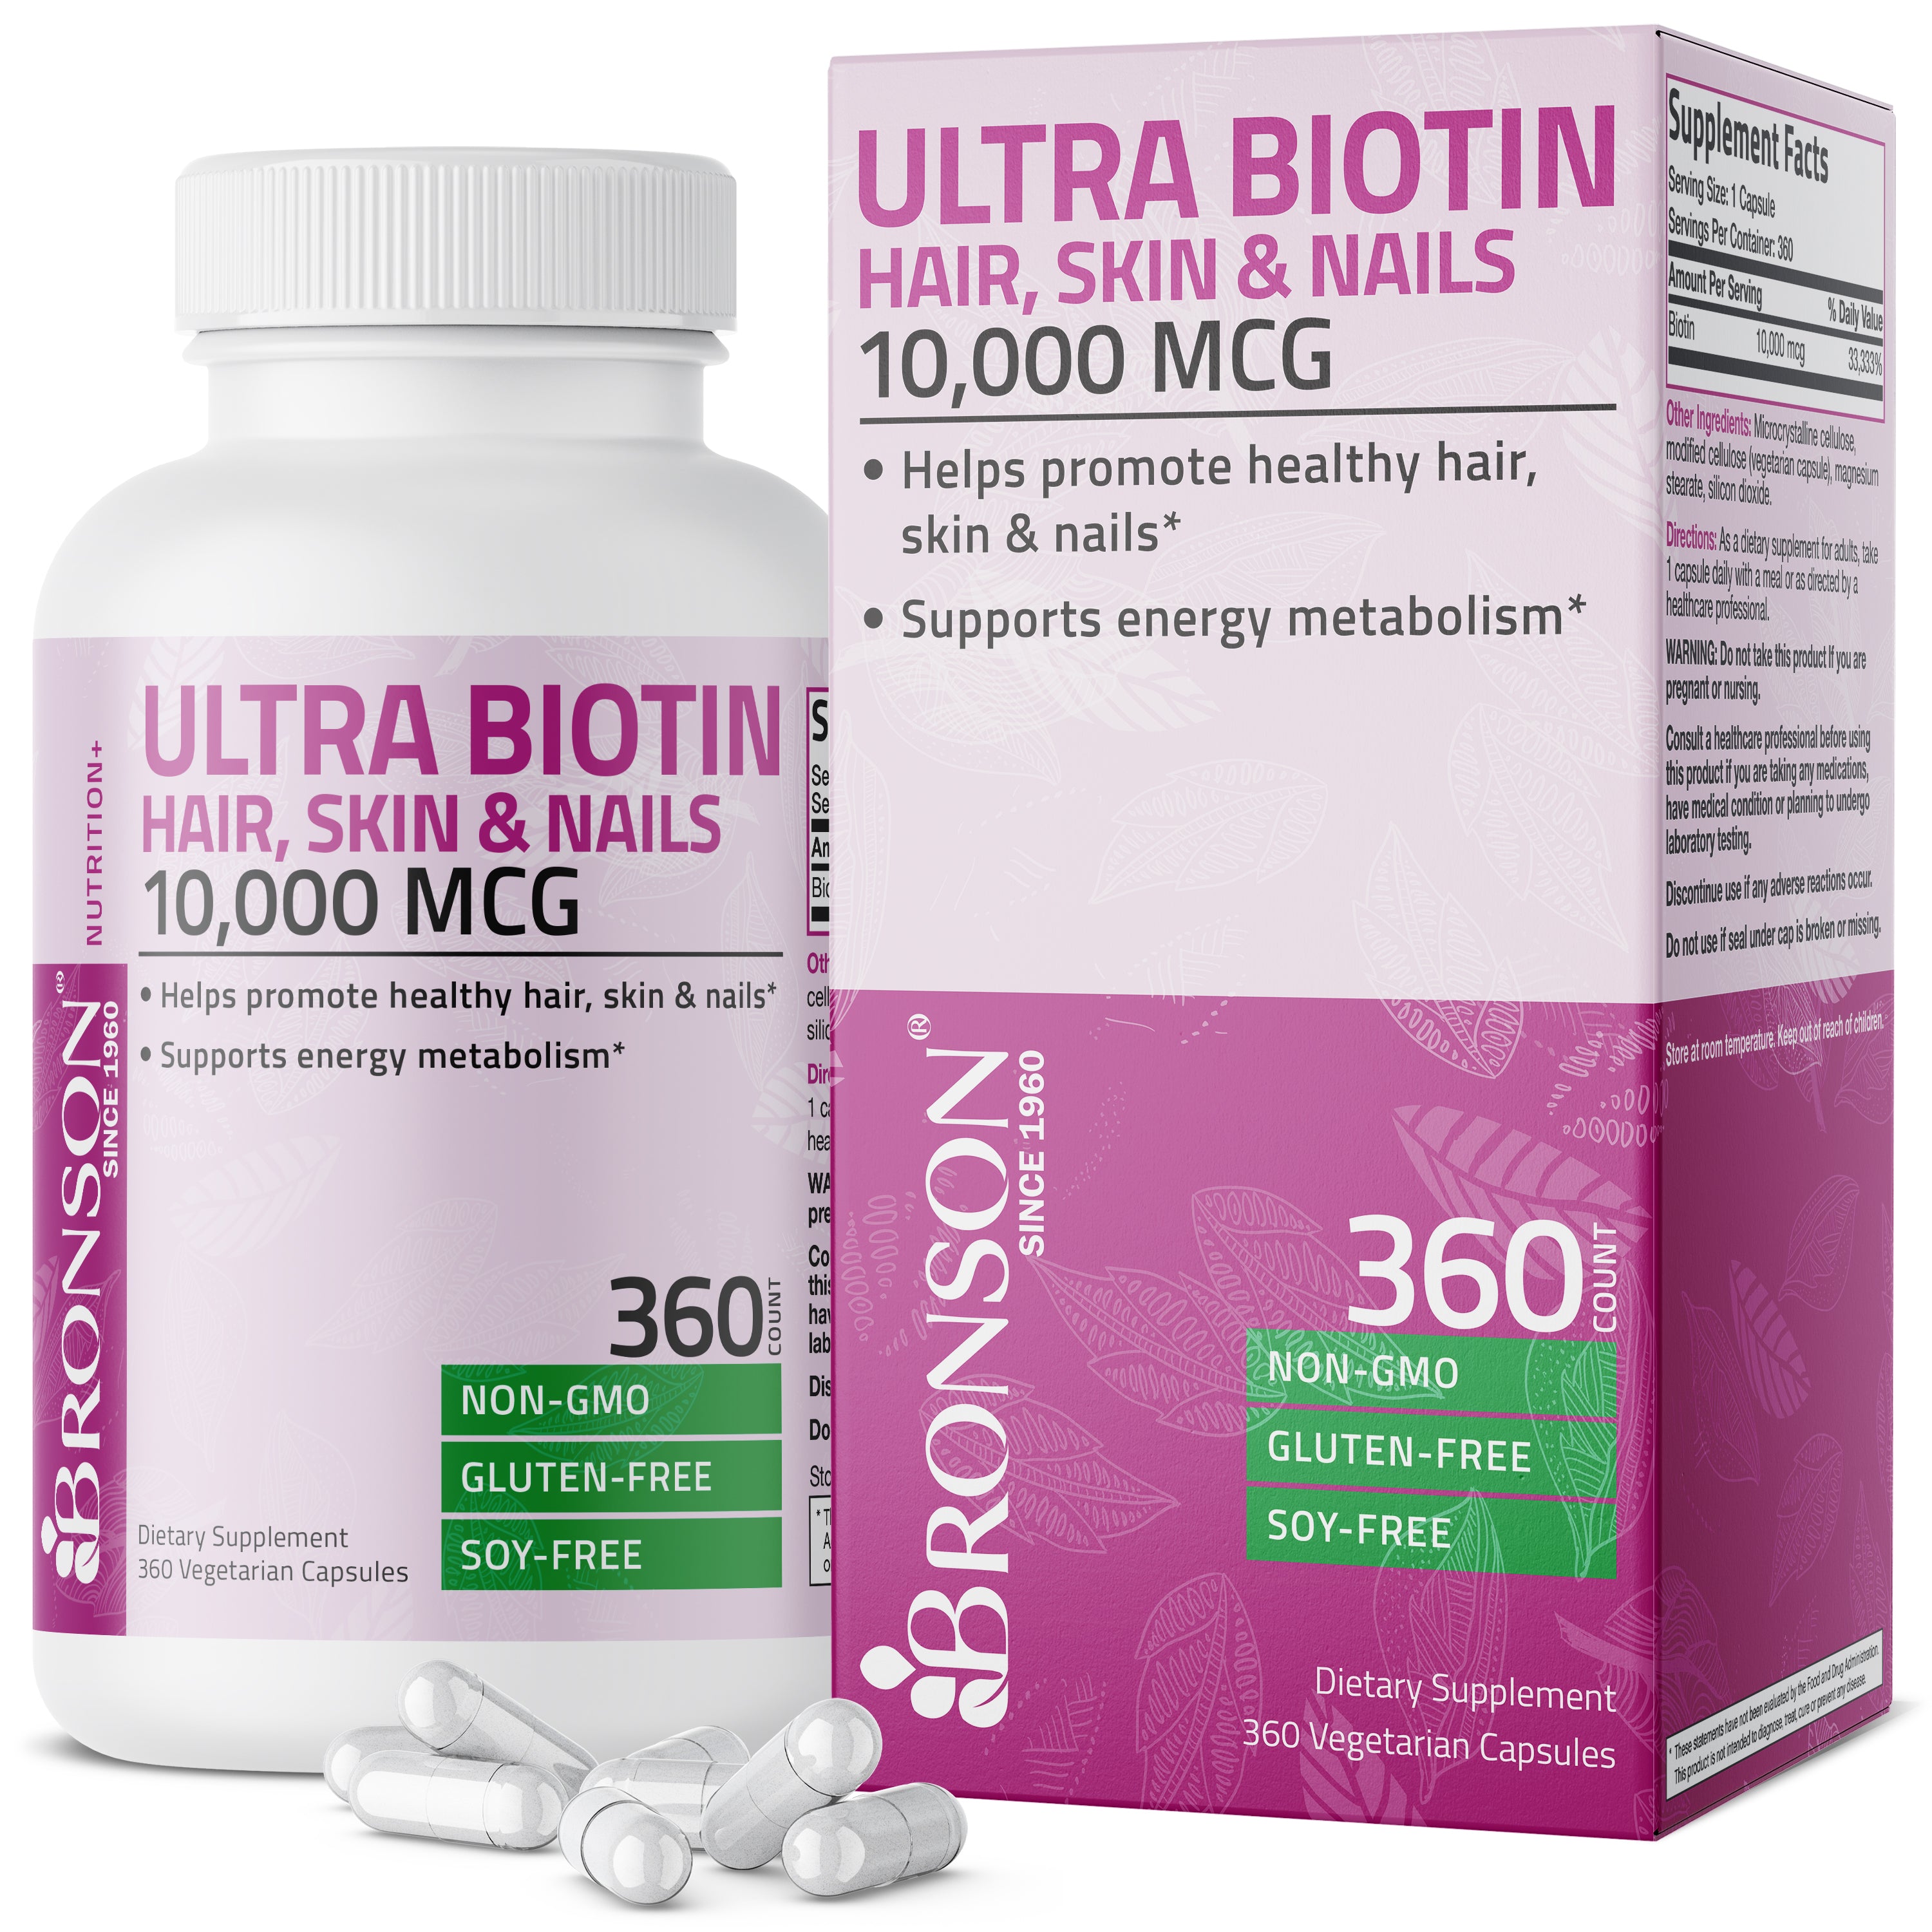 Ultra Biotin Hair, Skin & Nails - 10,000 mcg view 8 of 14